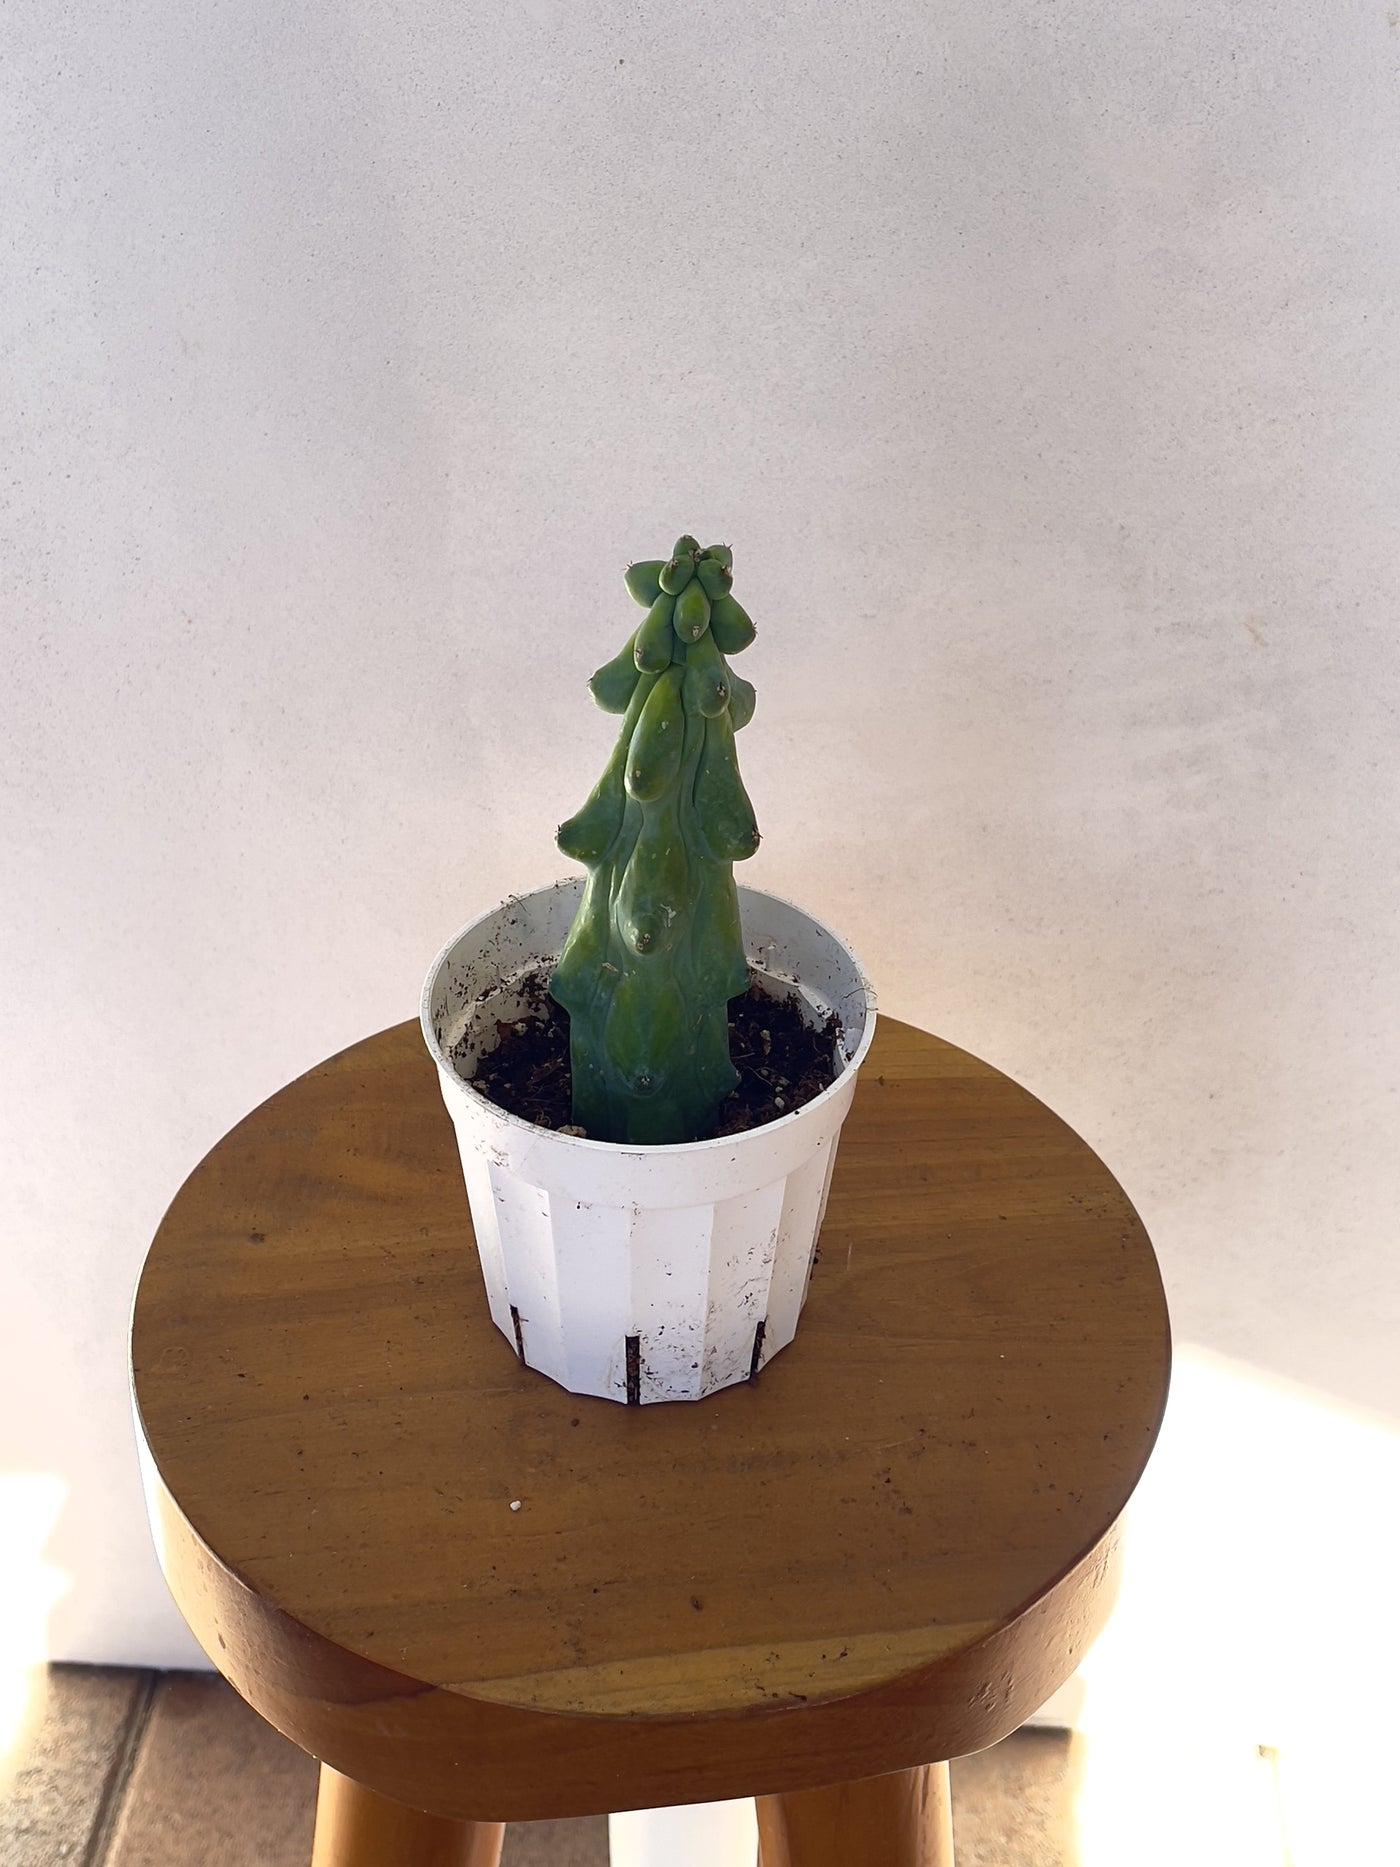 7" Boobie Cactus (Myrtillocactus Geometrizans Fukurokuryuzinboku) cheap near me - San Diego - Plant Vault 